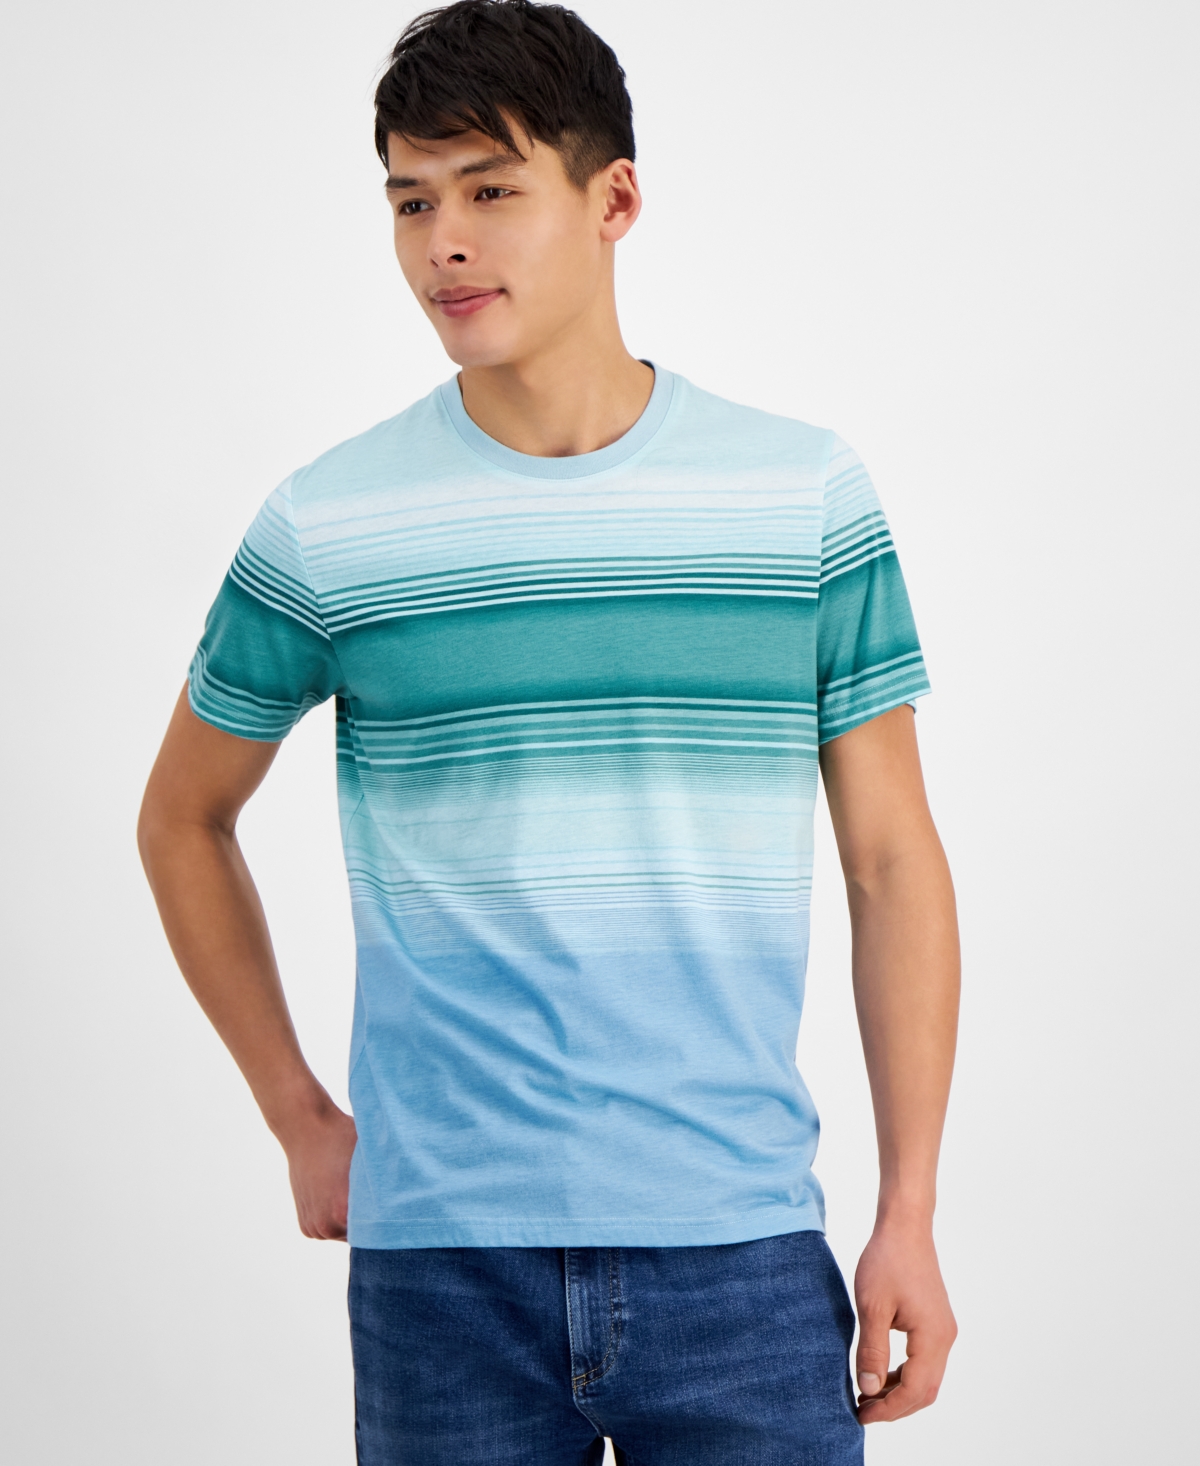 Men's Short Sleeve Crewneck Soft Stripe T-Shirt, Created for Macy's - Green Mist